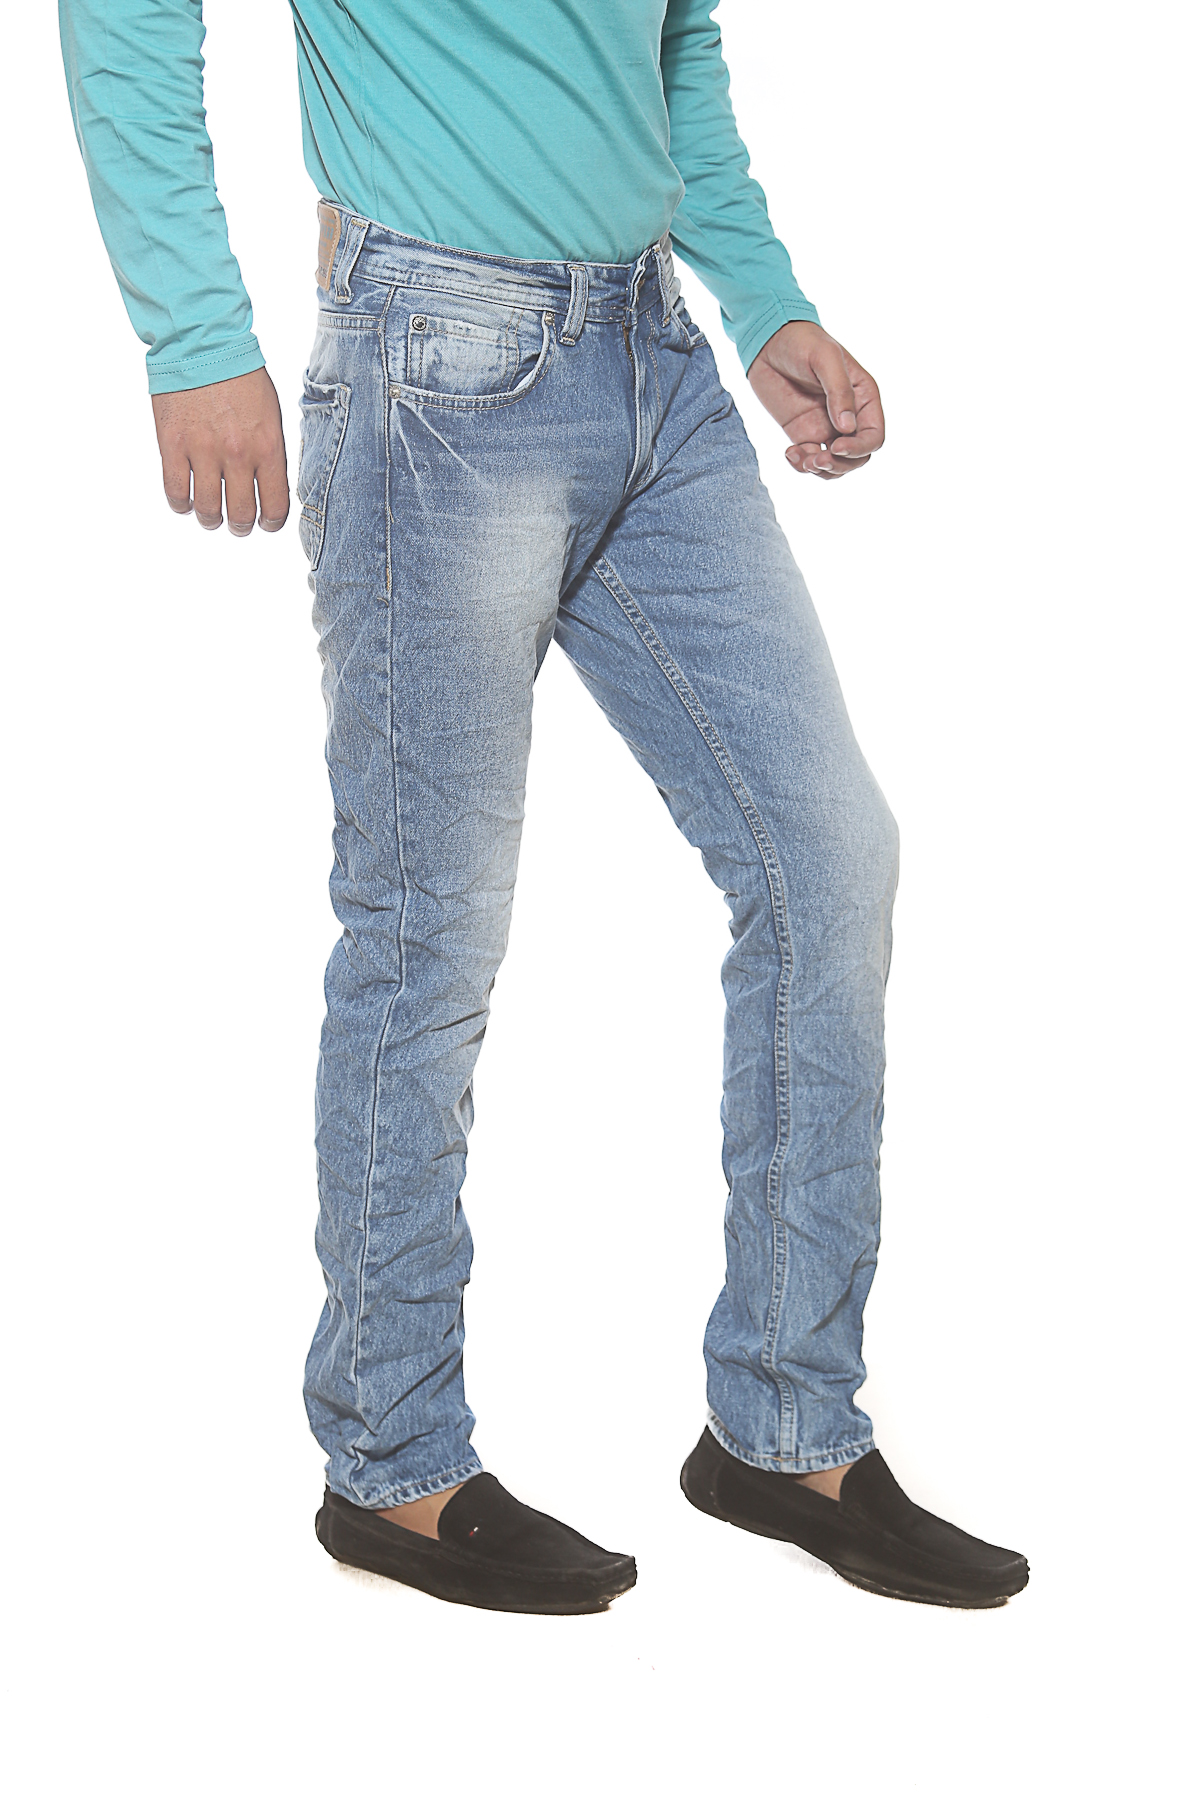 Buy Spykar Blue Low Rise Slim Fit Jeans (Rico)RO-W15-B Online @ ₹1199 ...